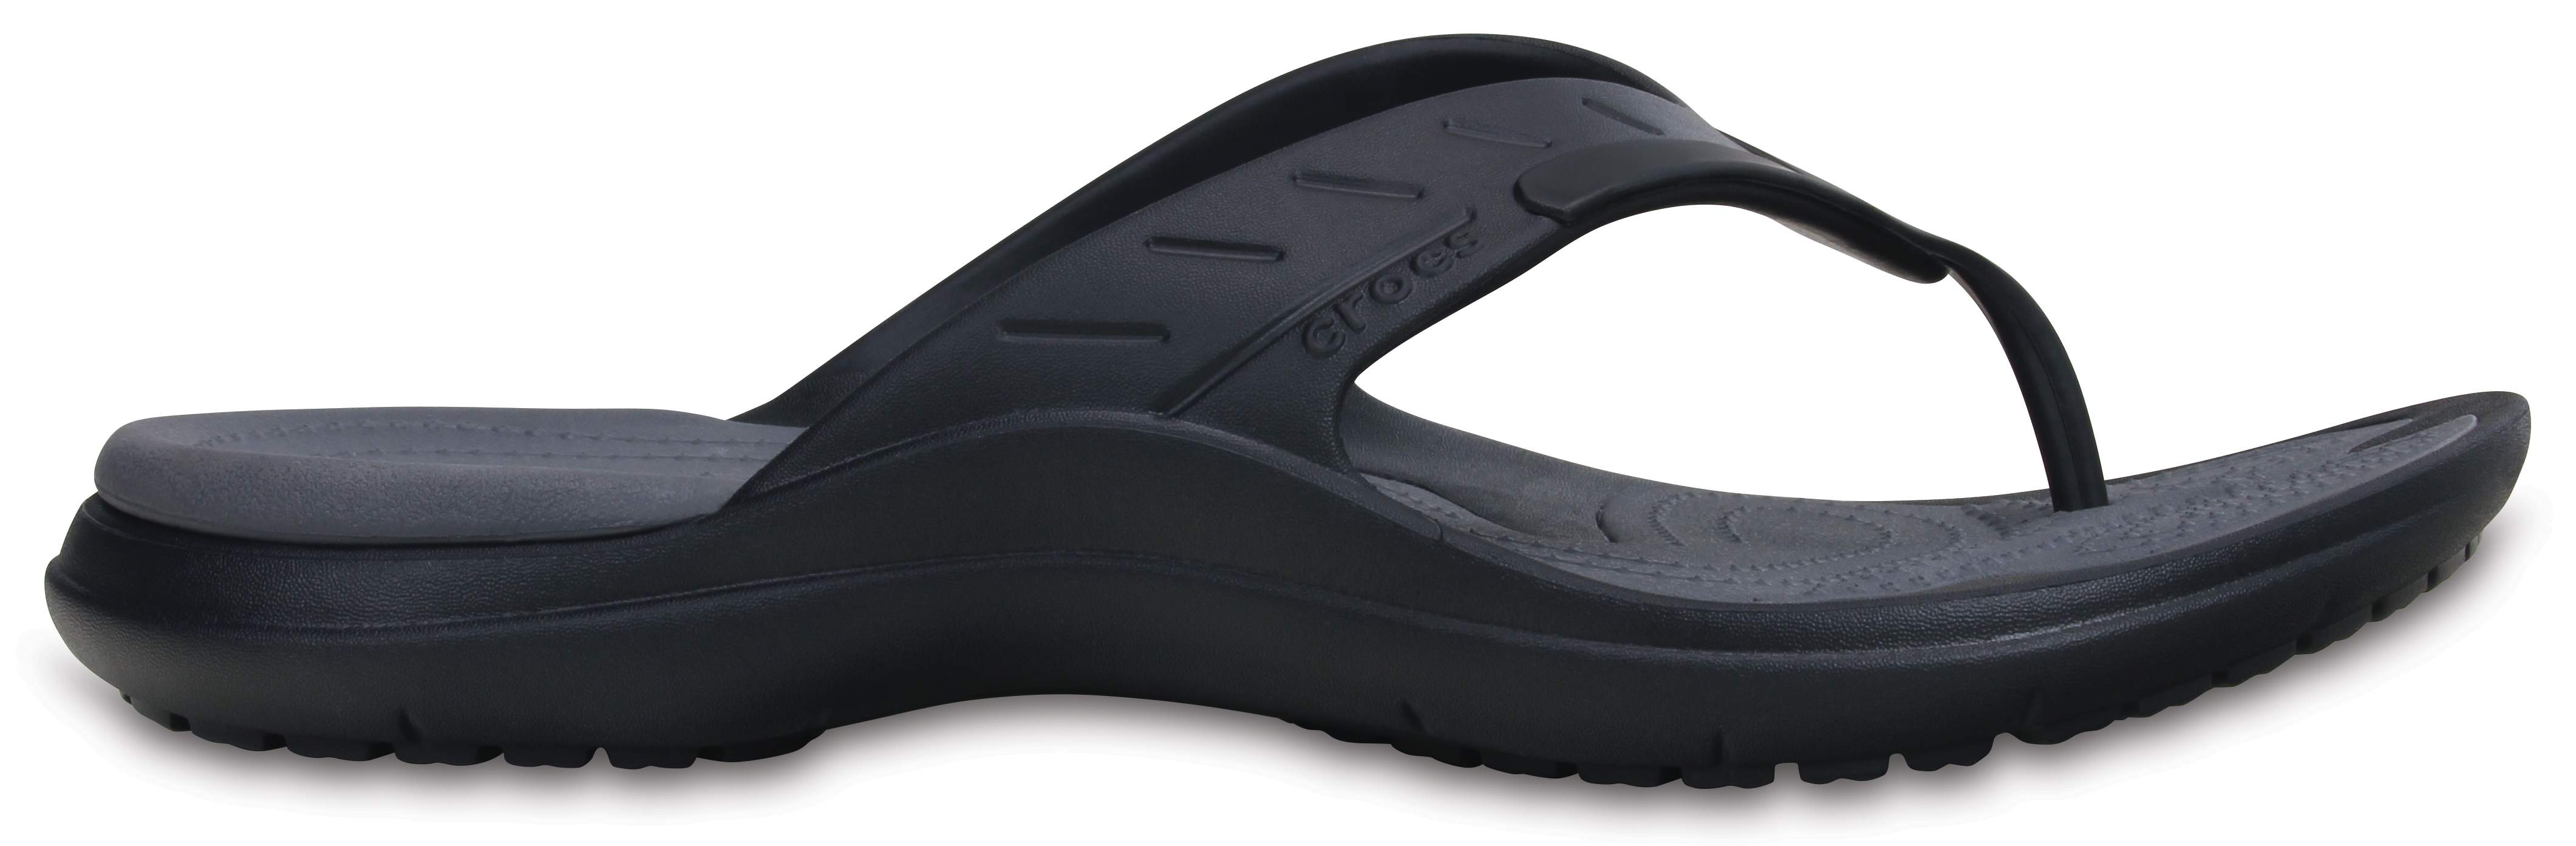 crocs men's modi sport flip flops